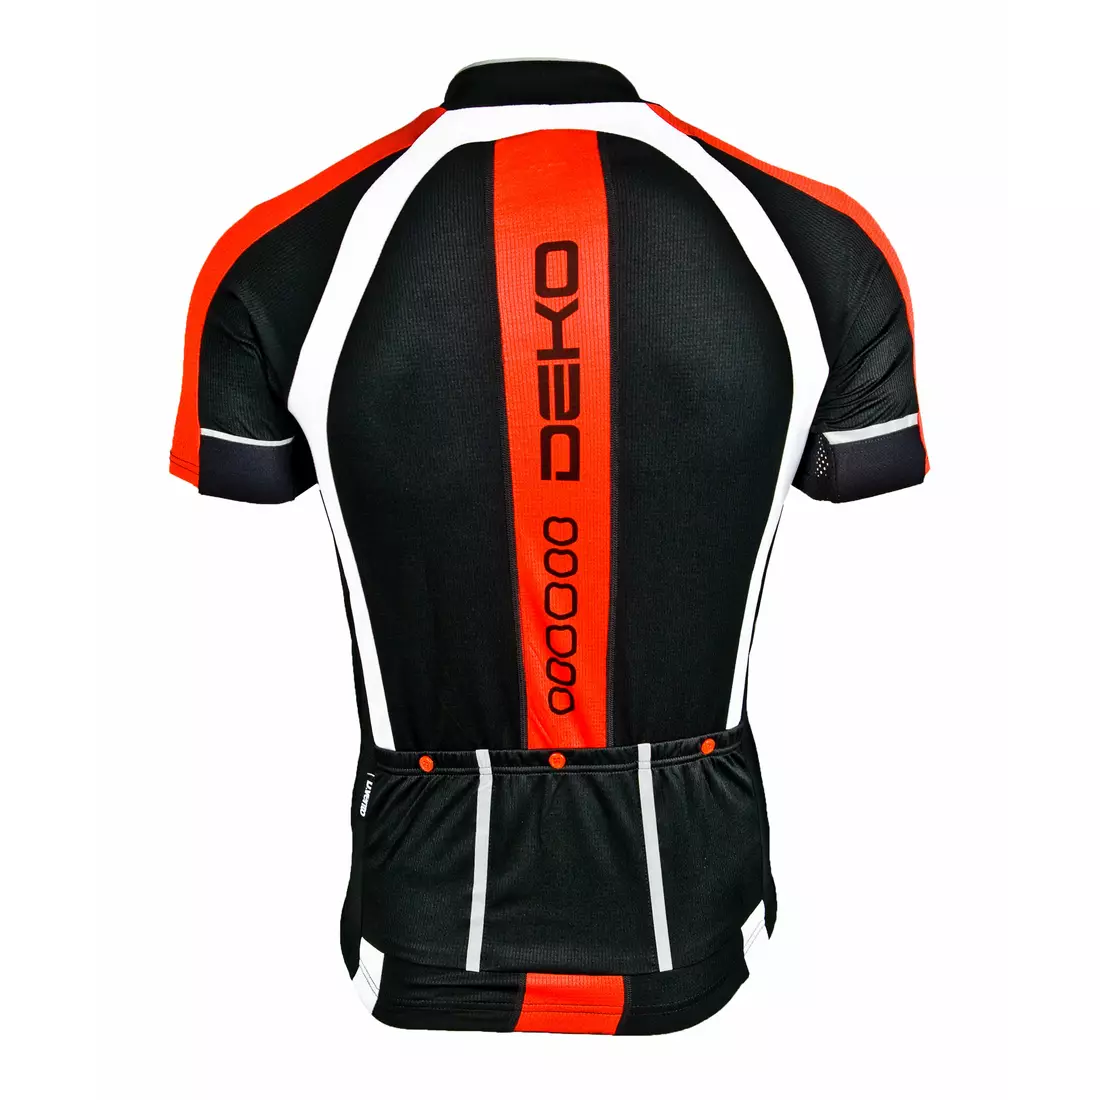 DEKO AIR X2 men's cycling jersey, black-red